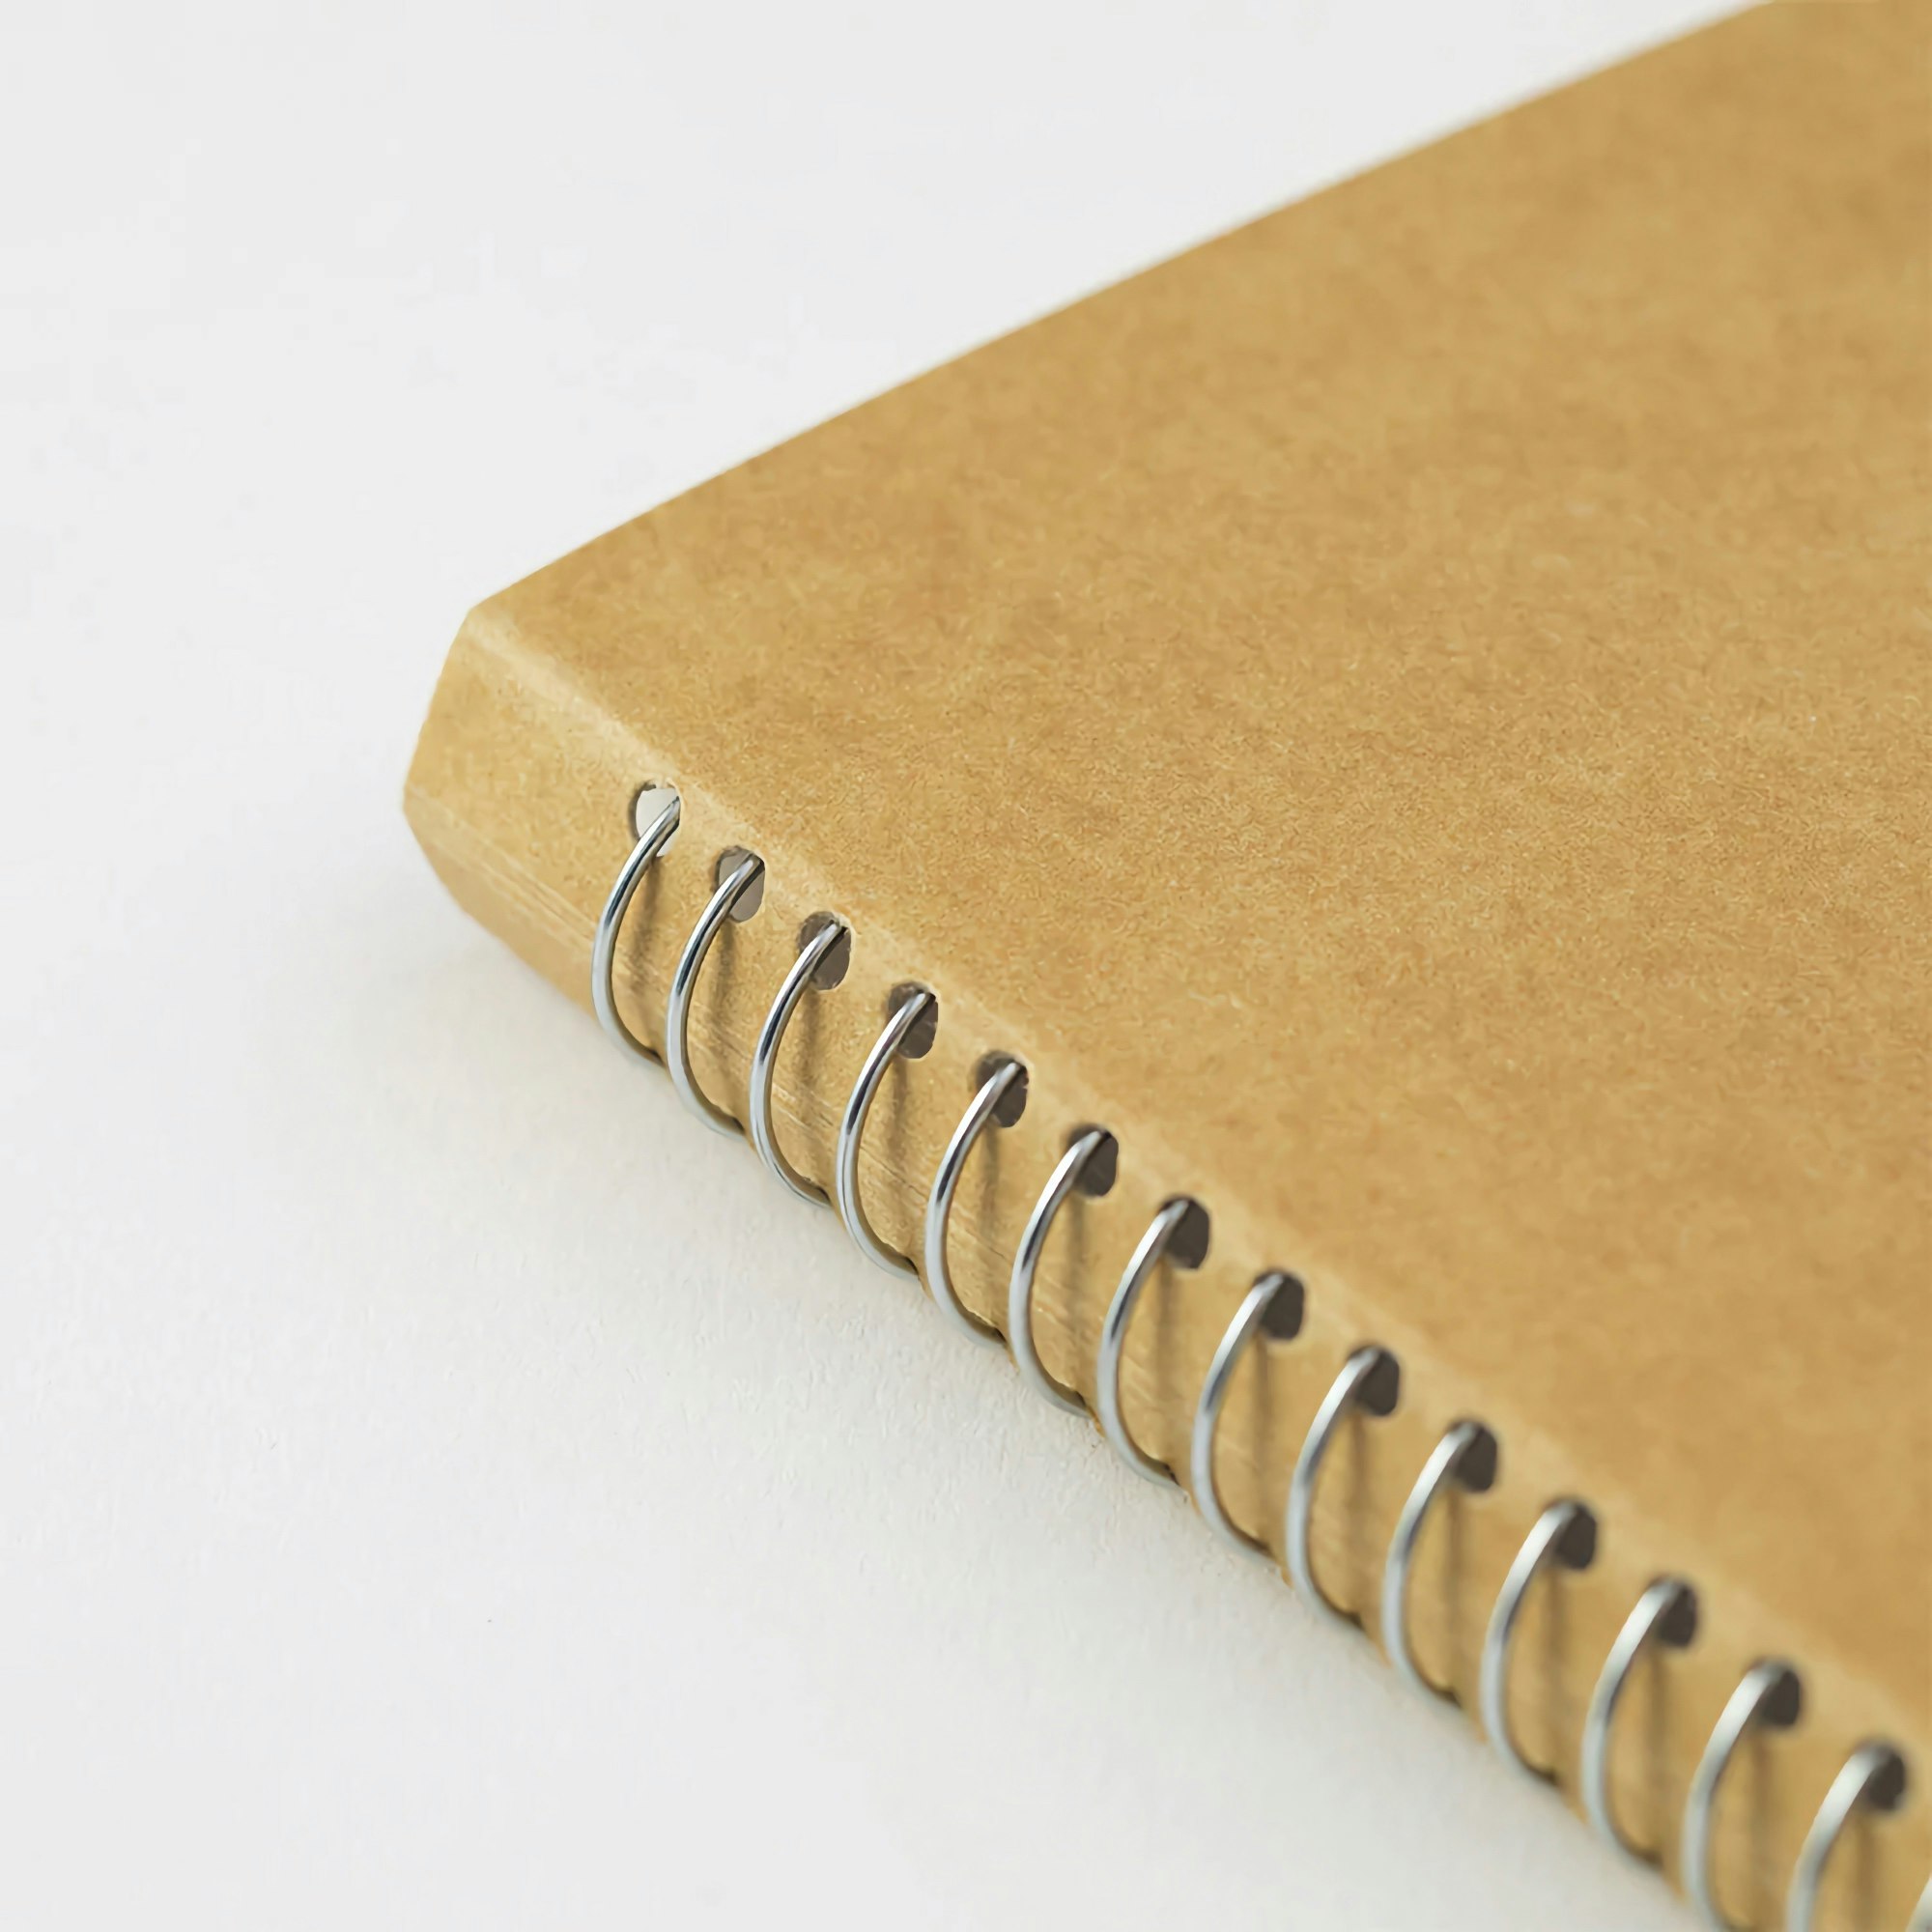 Traveler's Company Spiral Ring Notebook B6 Blank